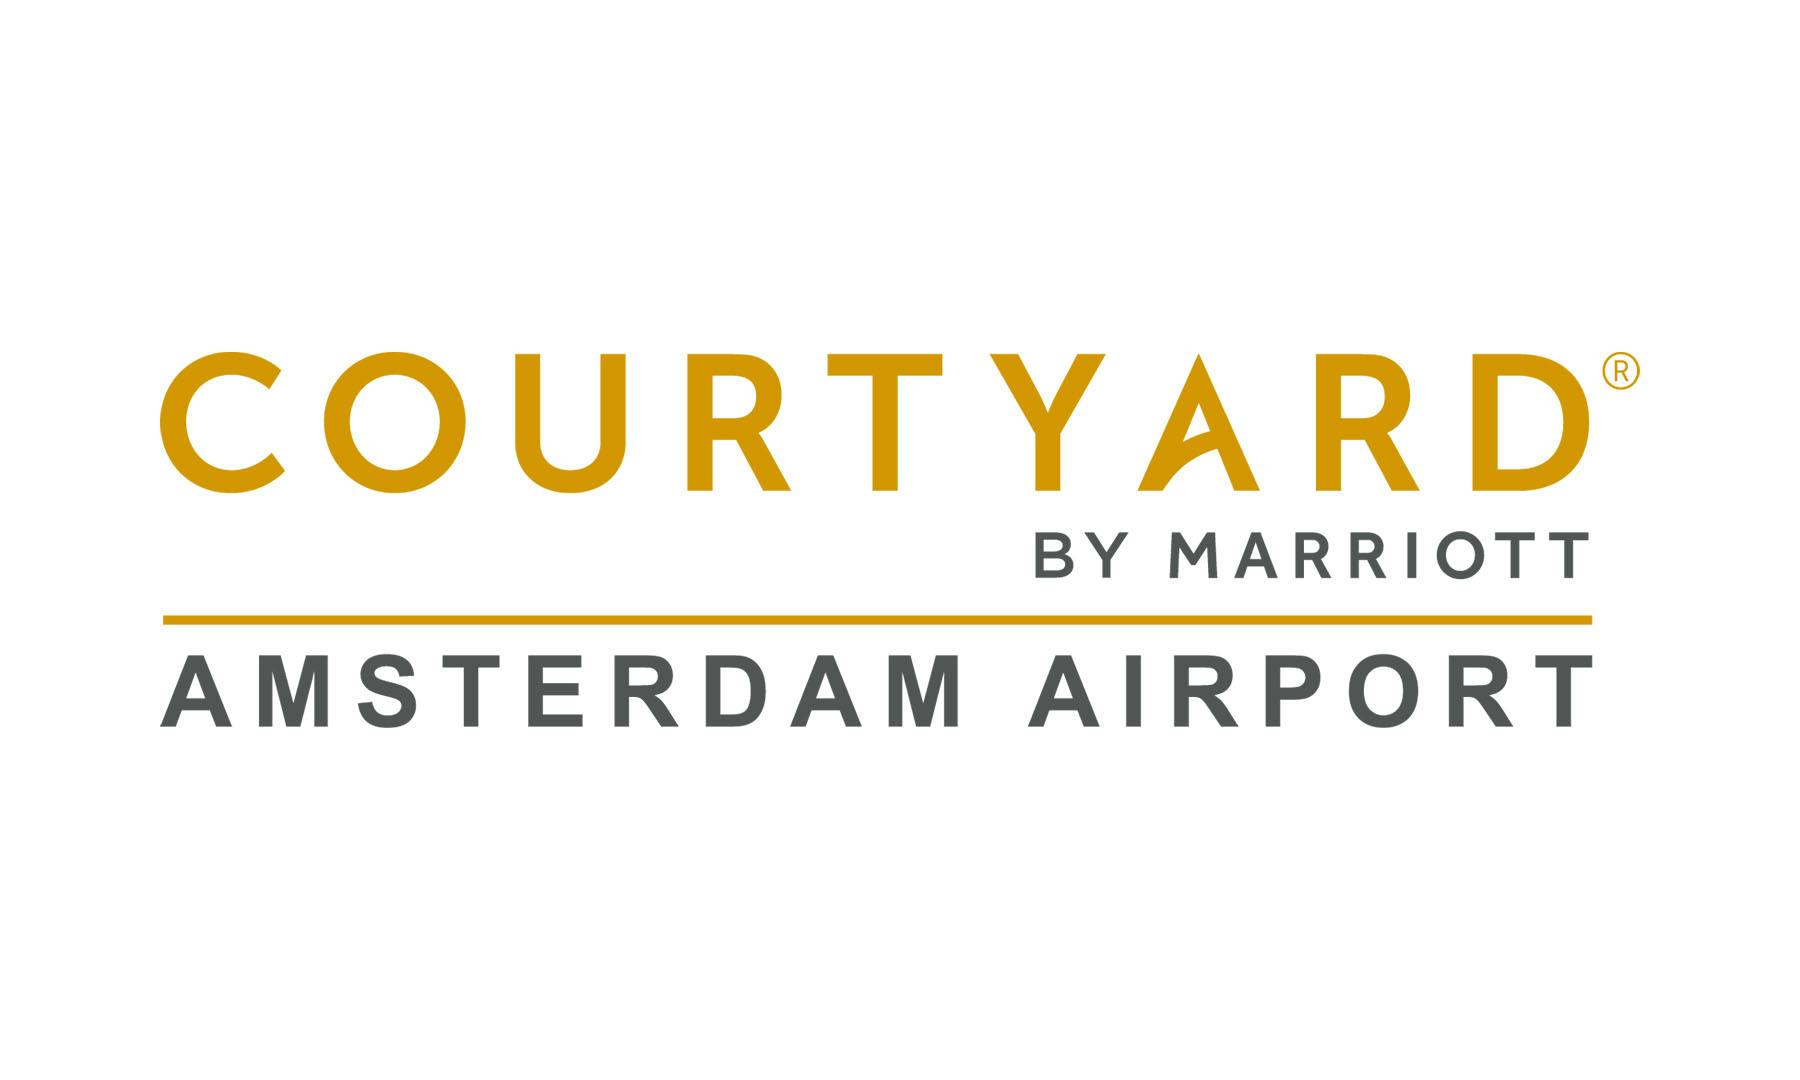 Courtyard Amsterdam Airport